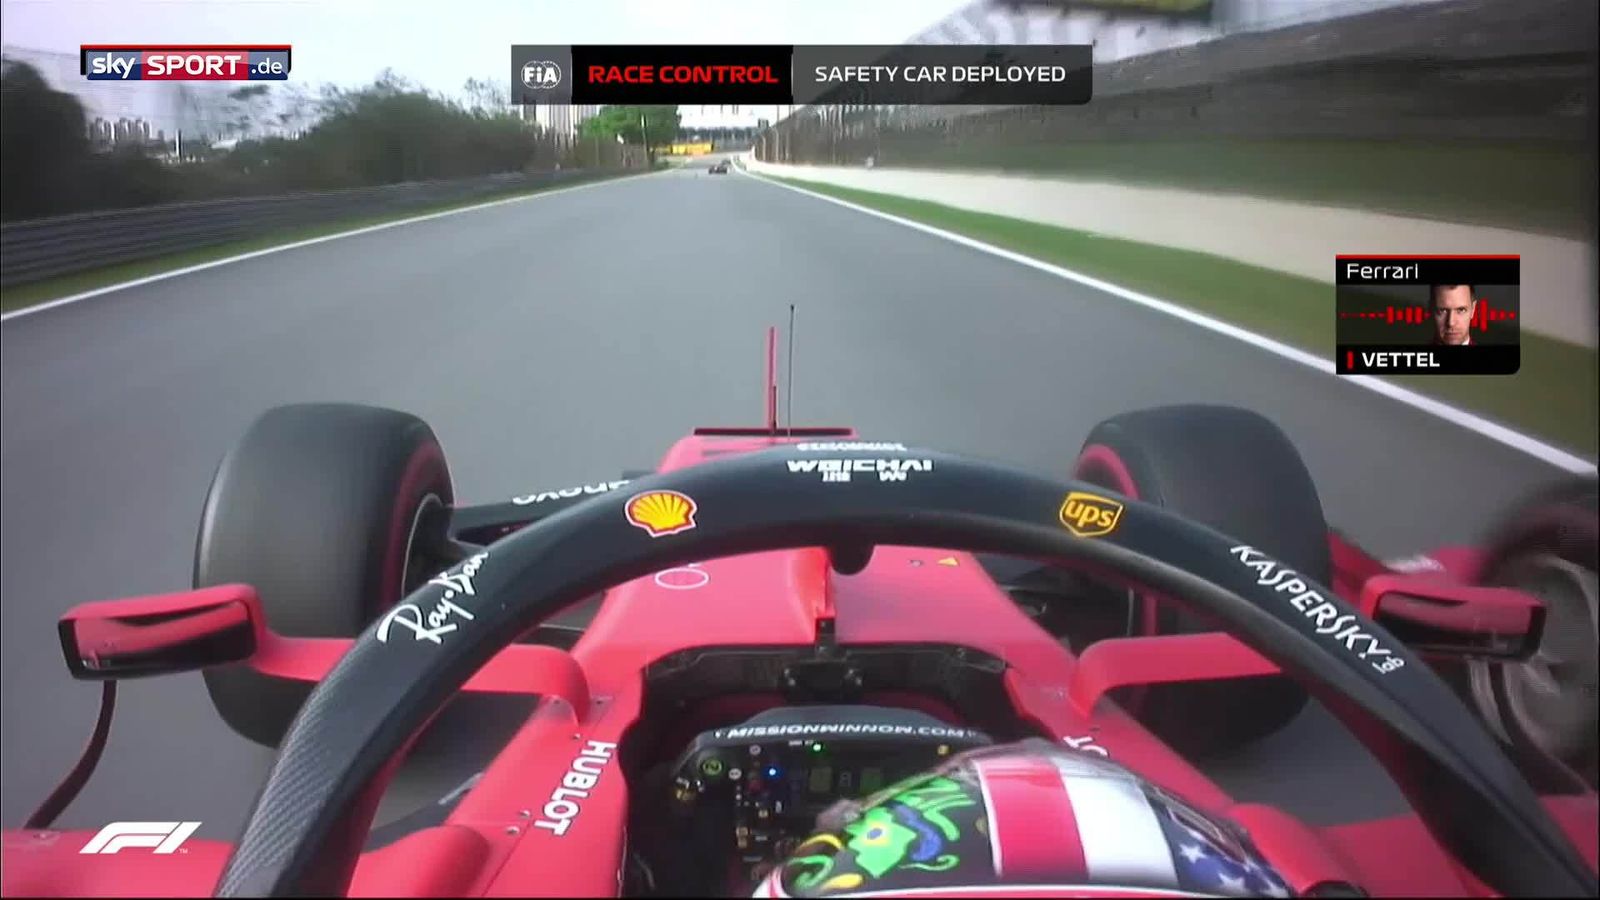 Formel 1: Sebastian Vettel und Charles Leclerc eskalieren am Boxenfunk nach Crash - Sky Sport